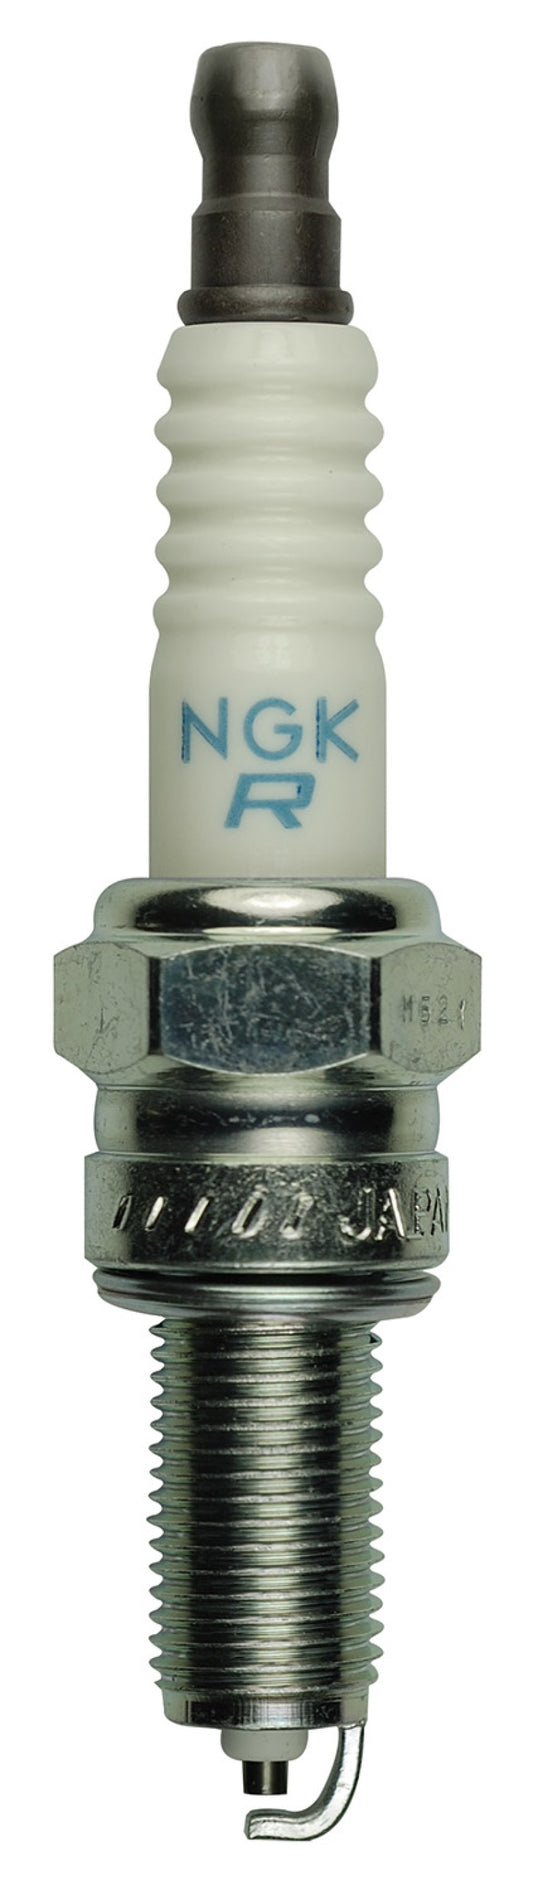 NGK Standard Spark Plug Box of 4 (MR9F)